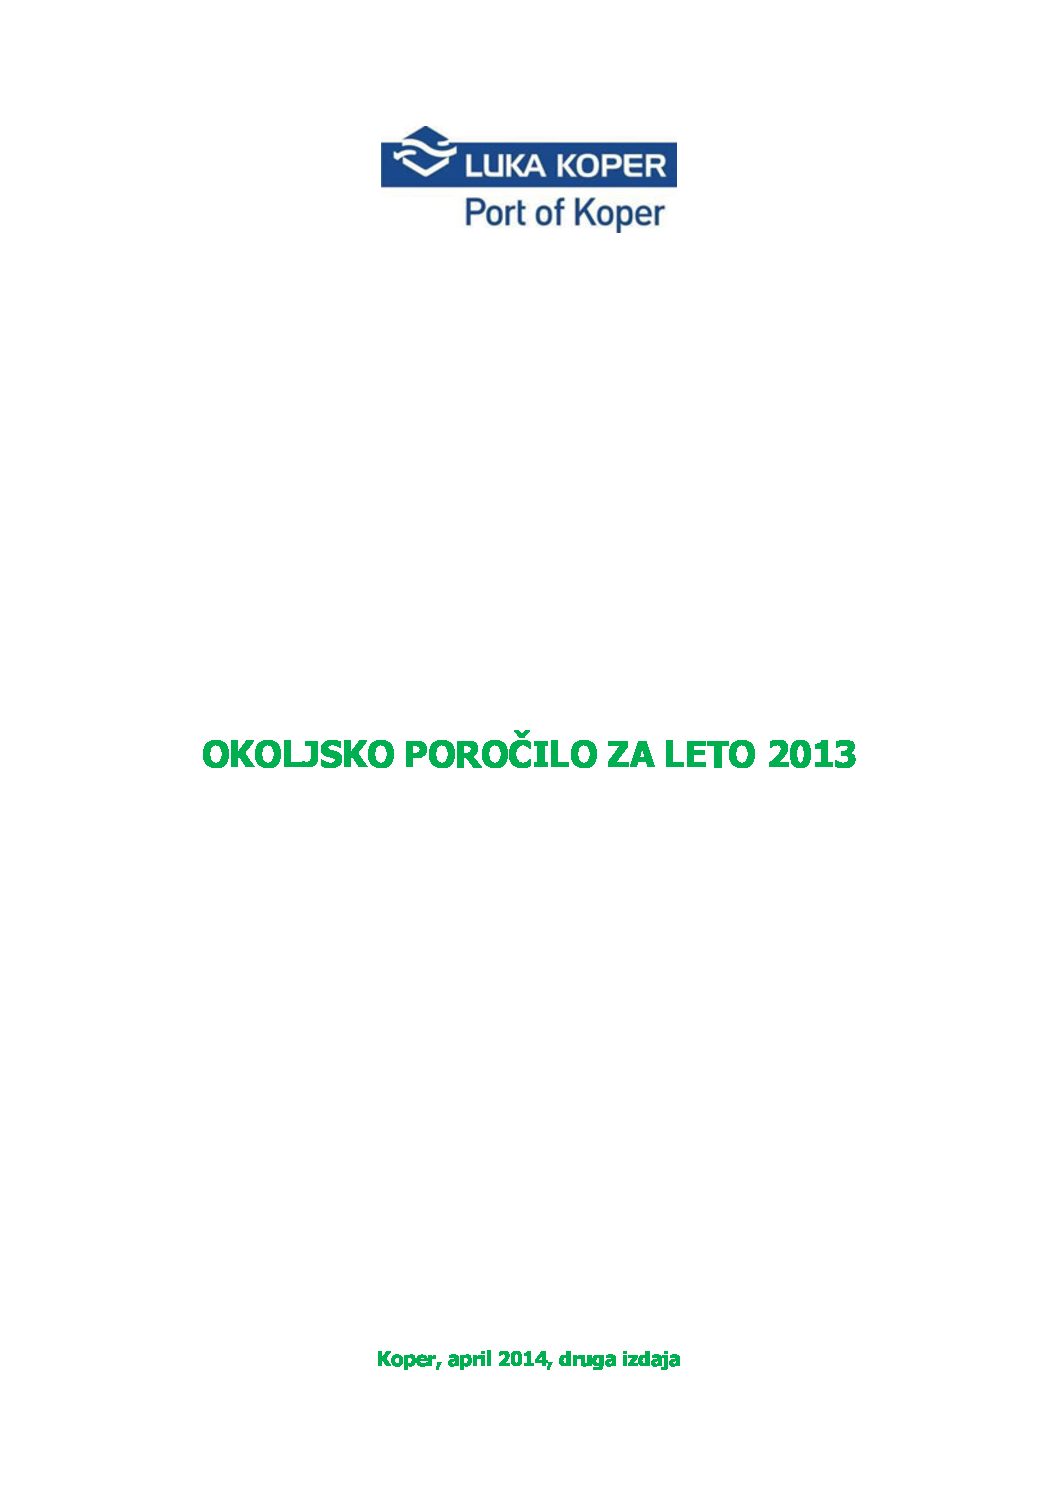 Okoljsko porocilo Luka Koper 2013 pdf